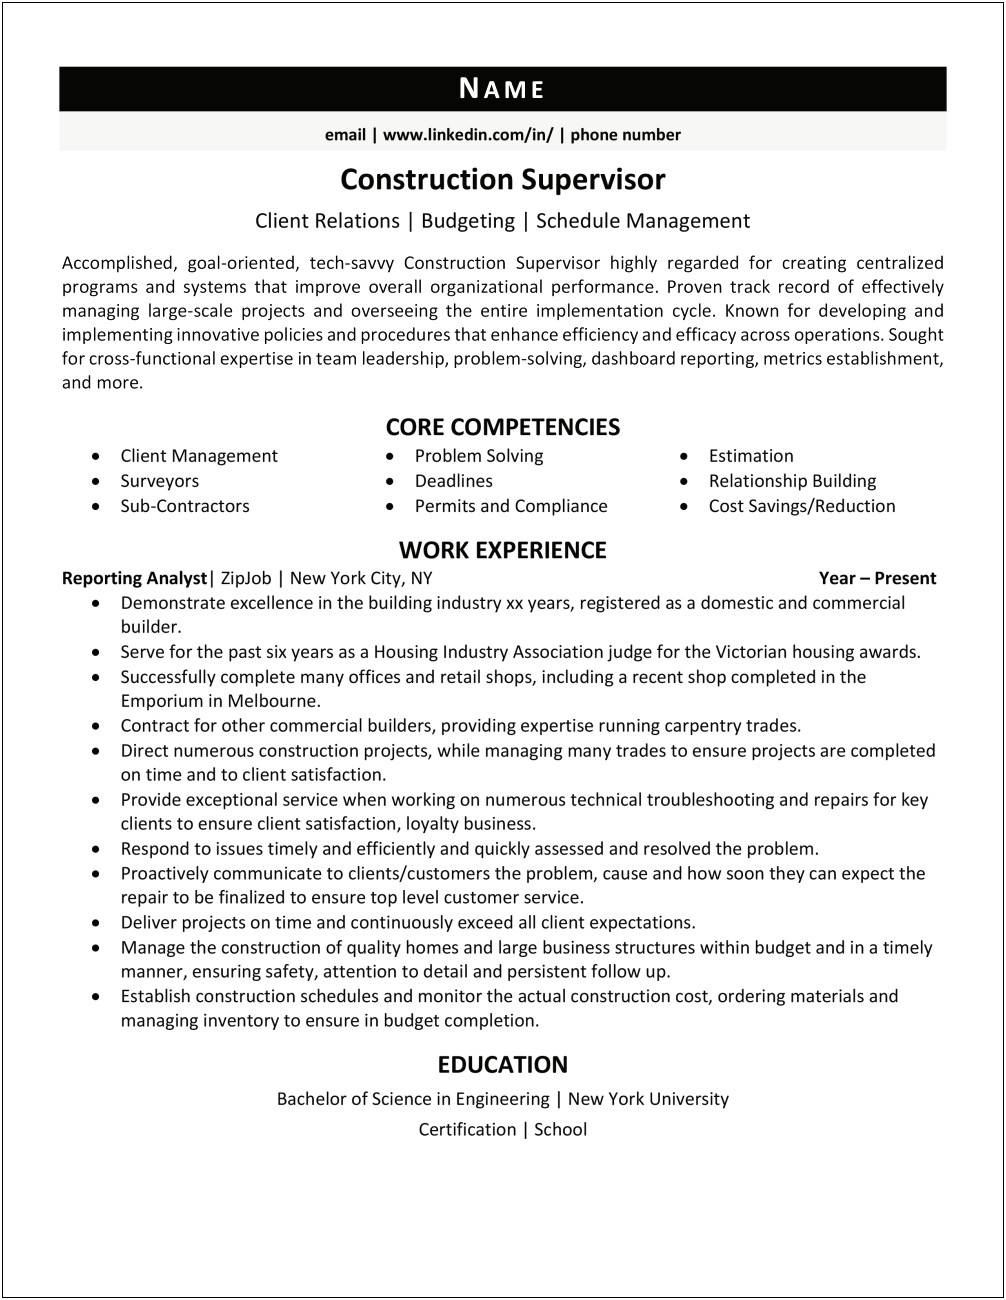 Resume Construction Supervisor Job Description